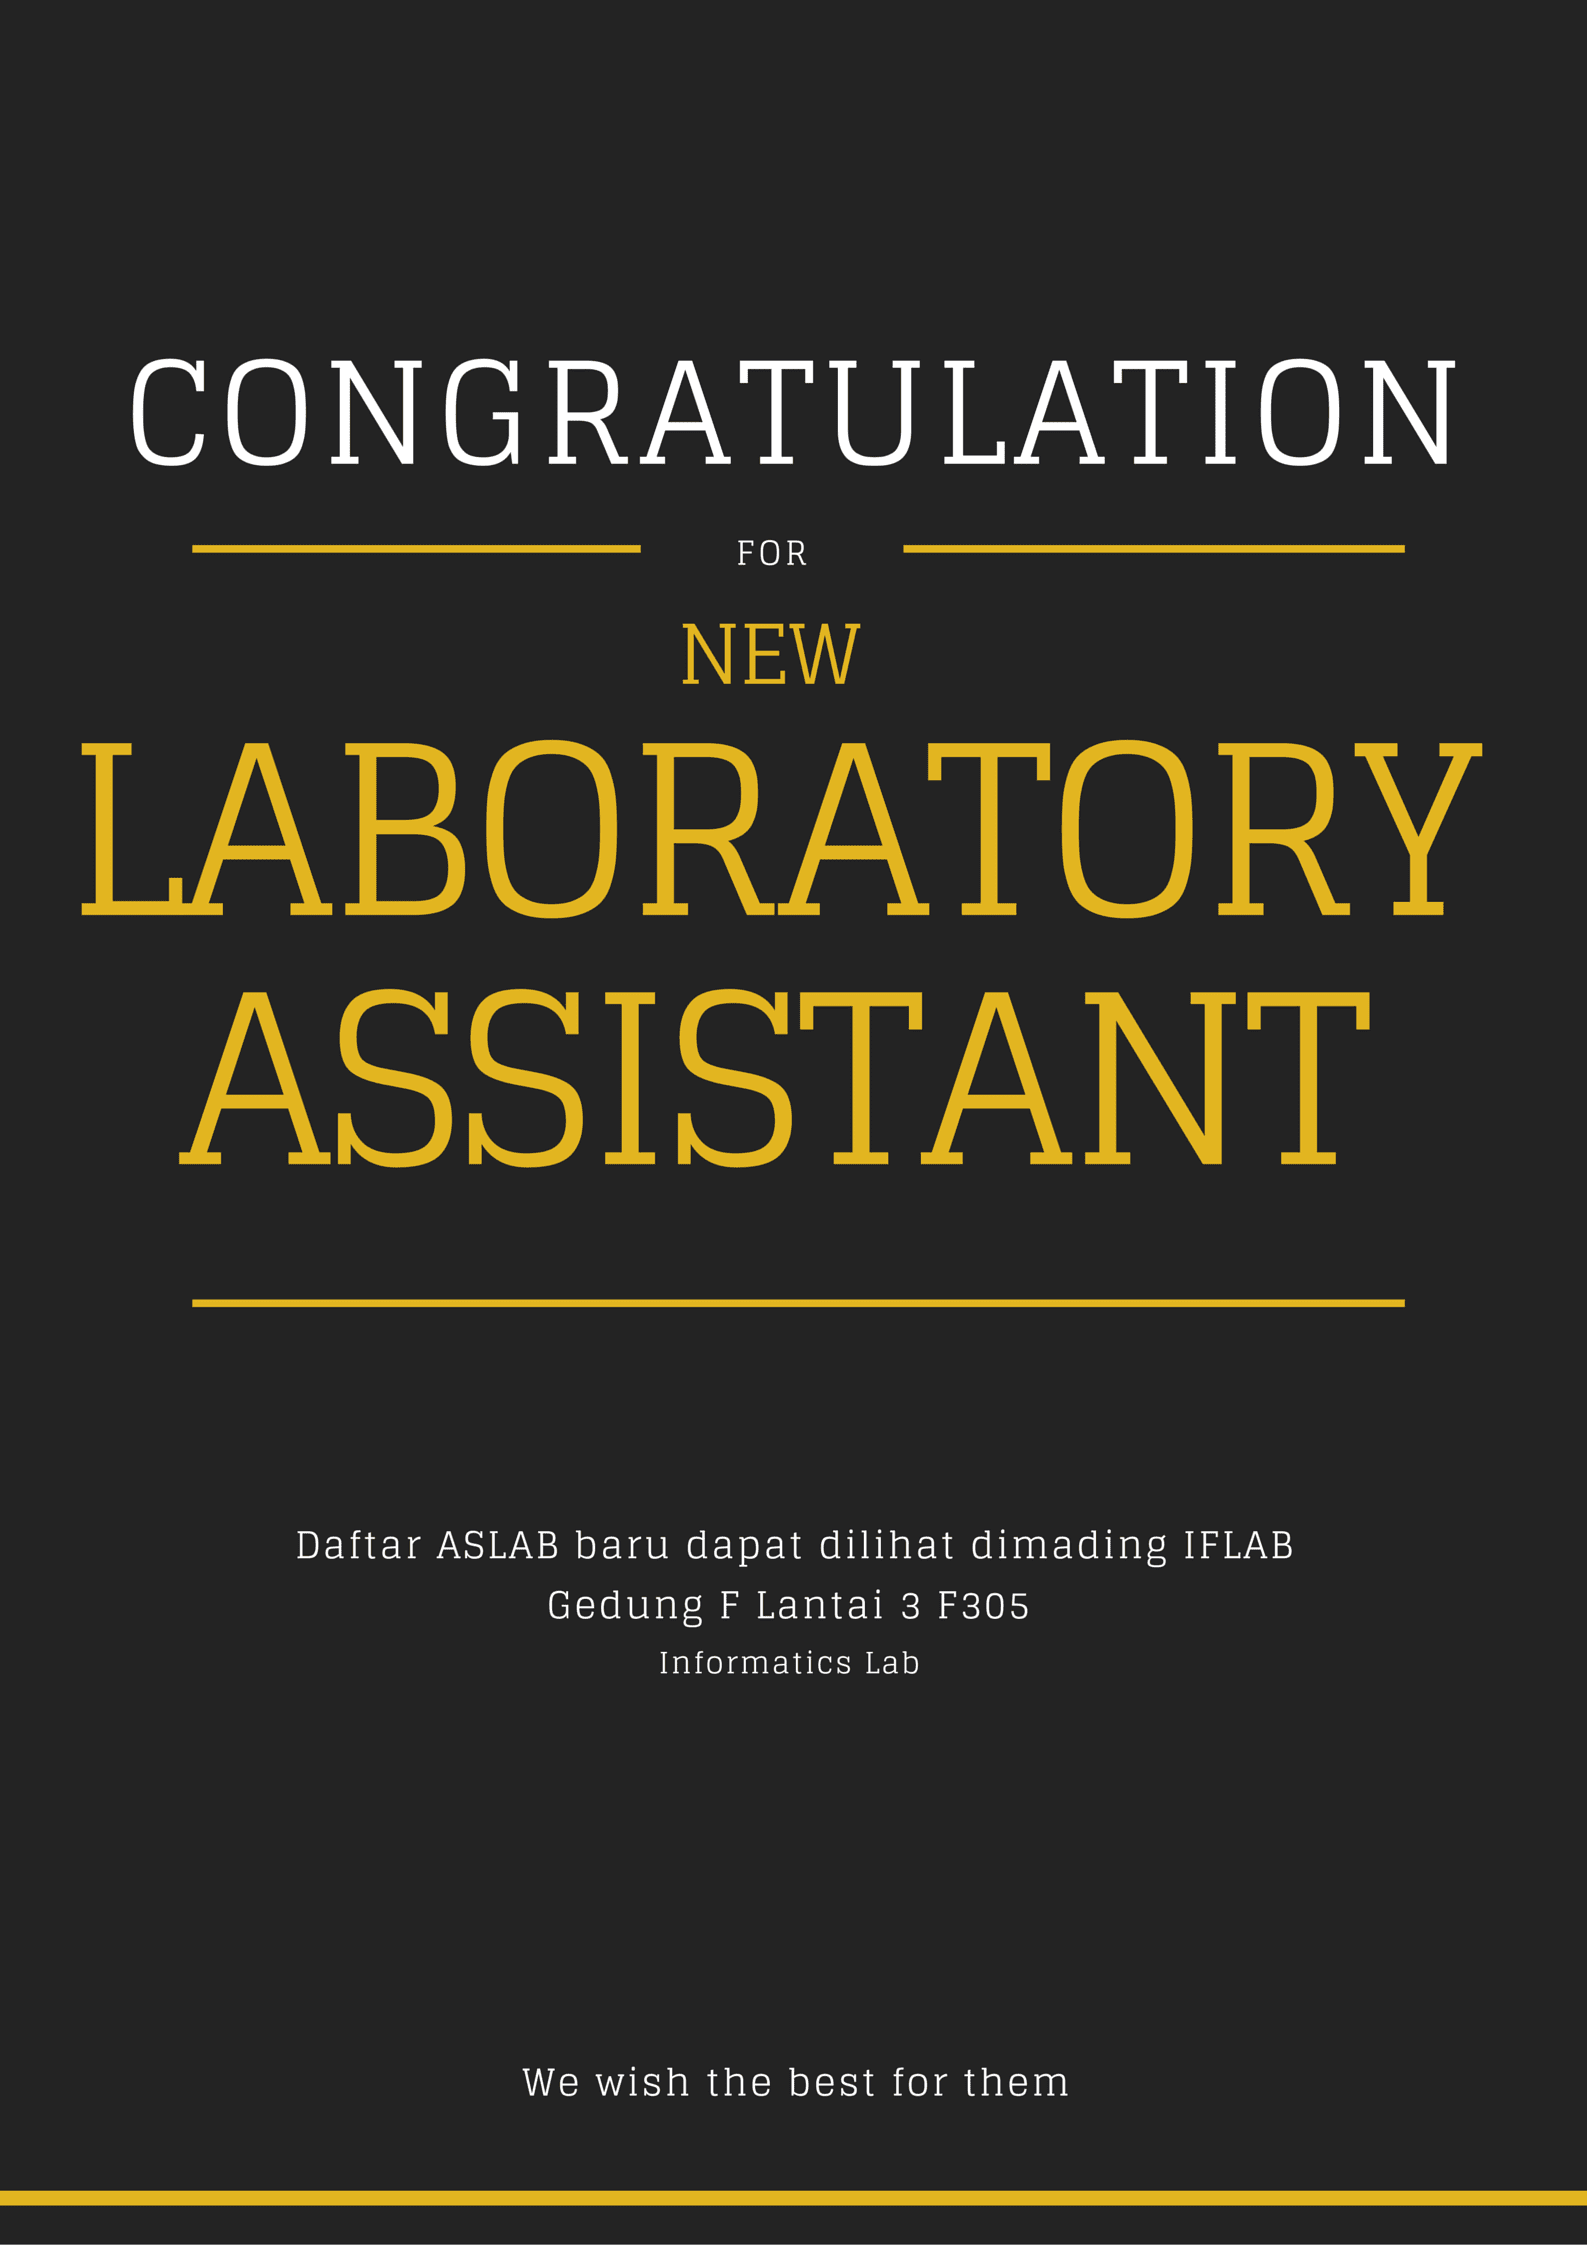 Announcement of Informatics Laboratory Assistant 2016/2017